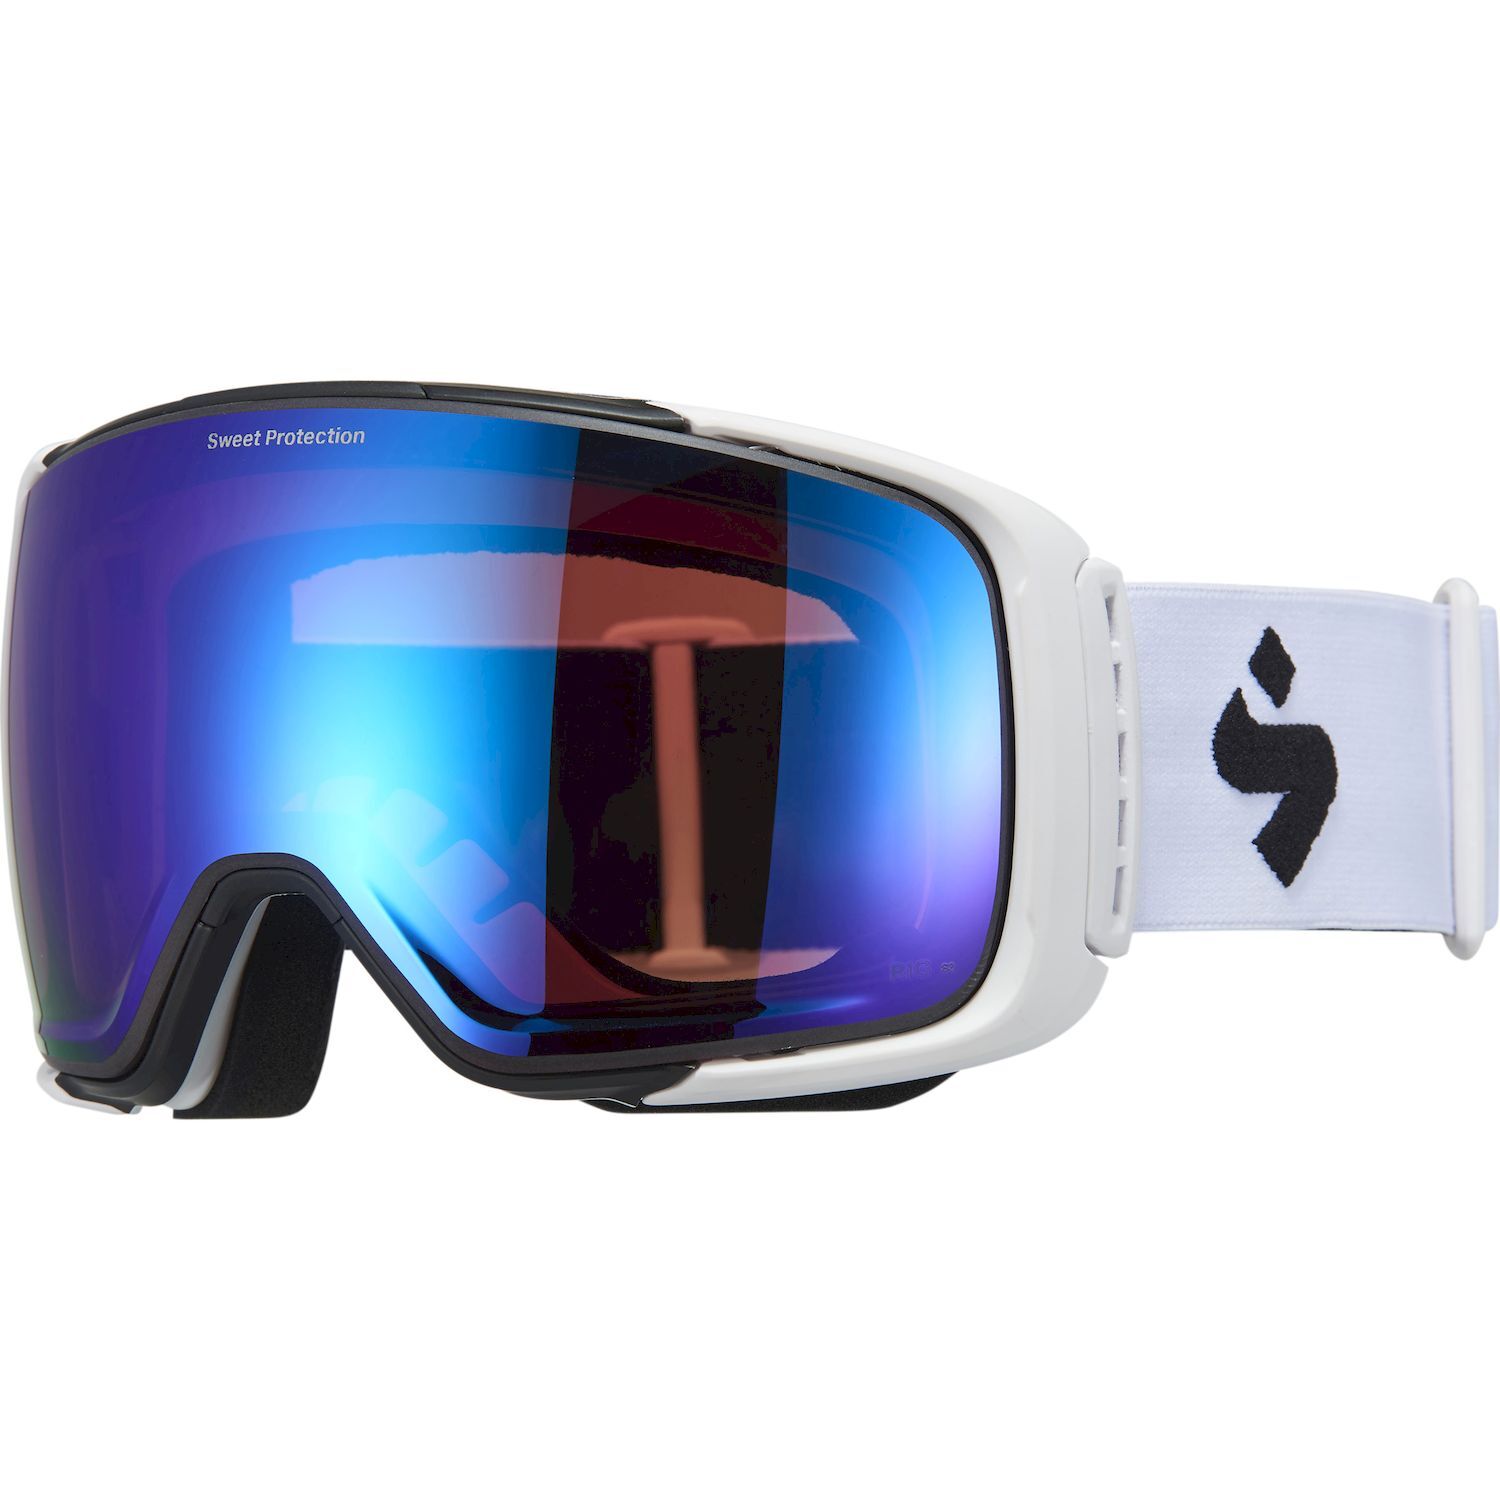 Sweet Protection Interstellar RIG Reflect - Ski goggles - Men's